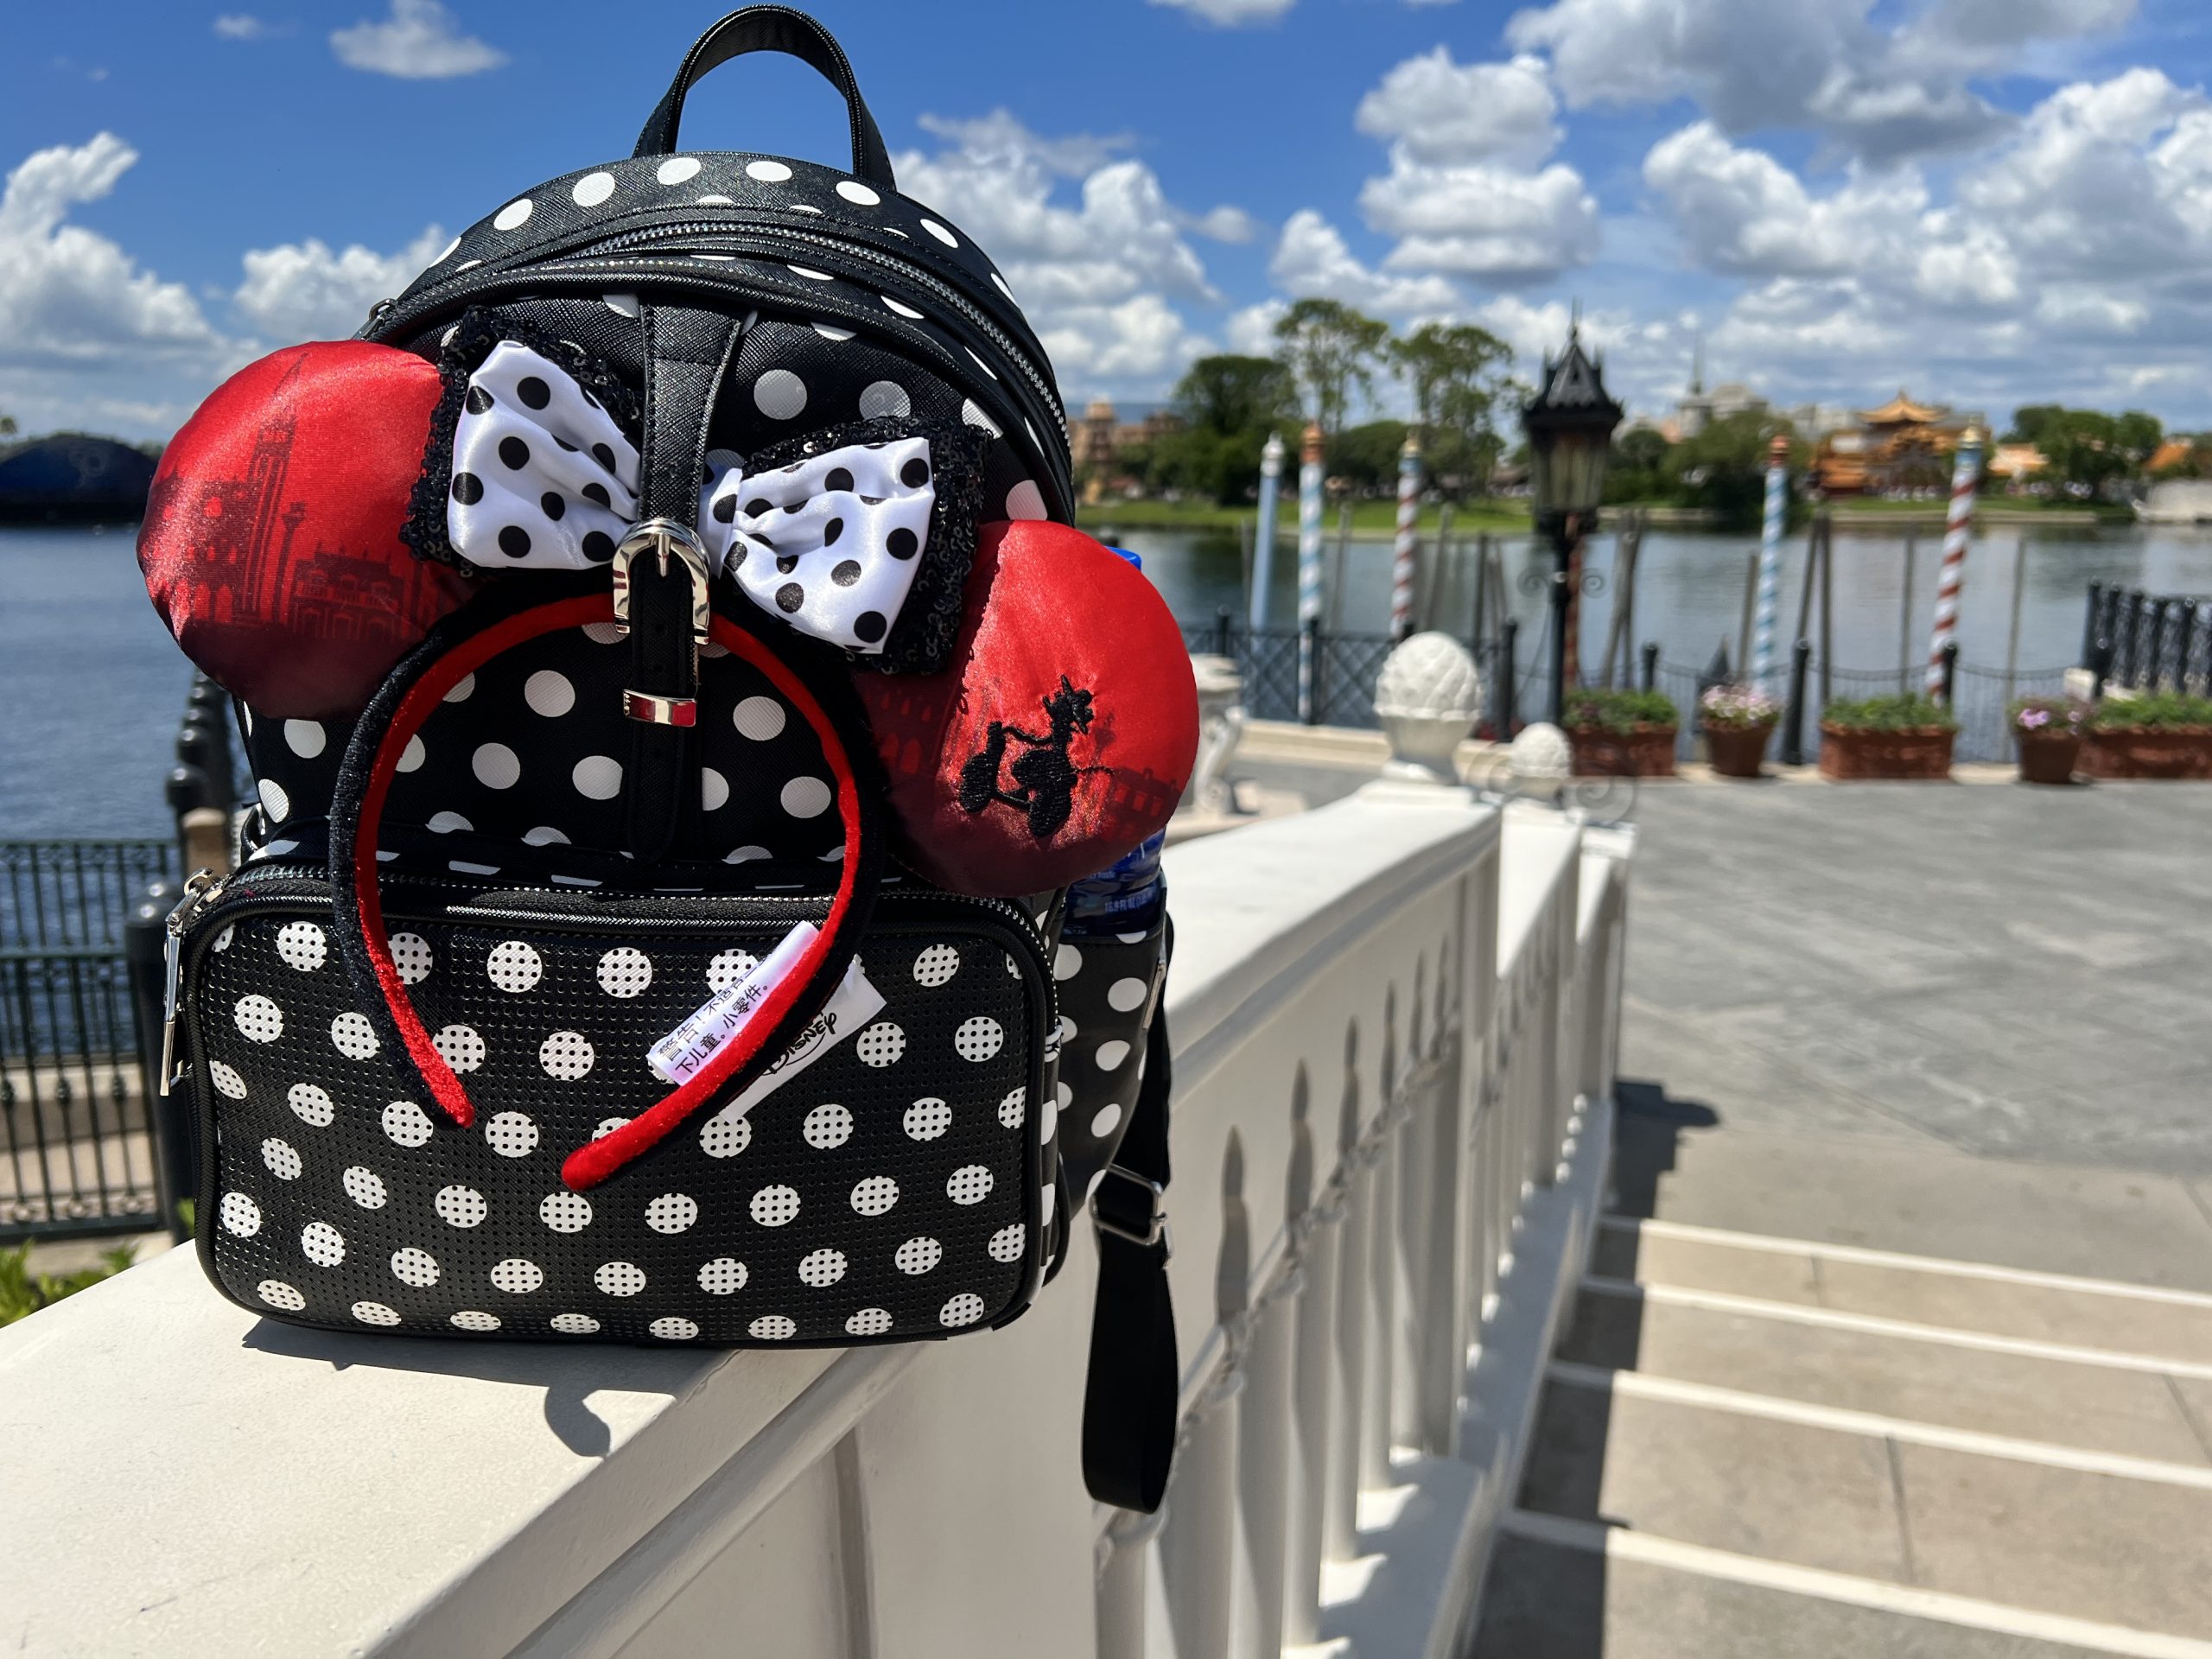 Disney Duffle Bags Adults, Disney Travel Bags Adults